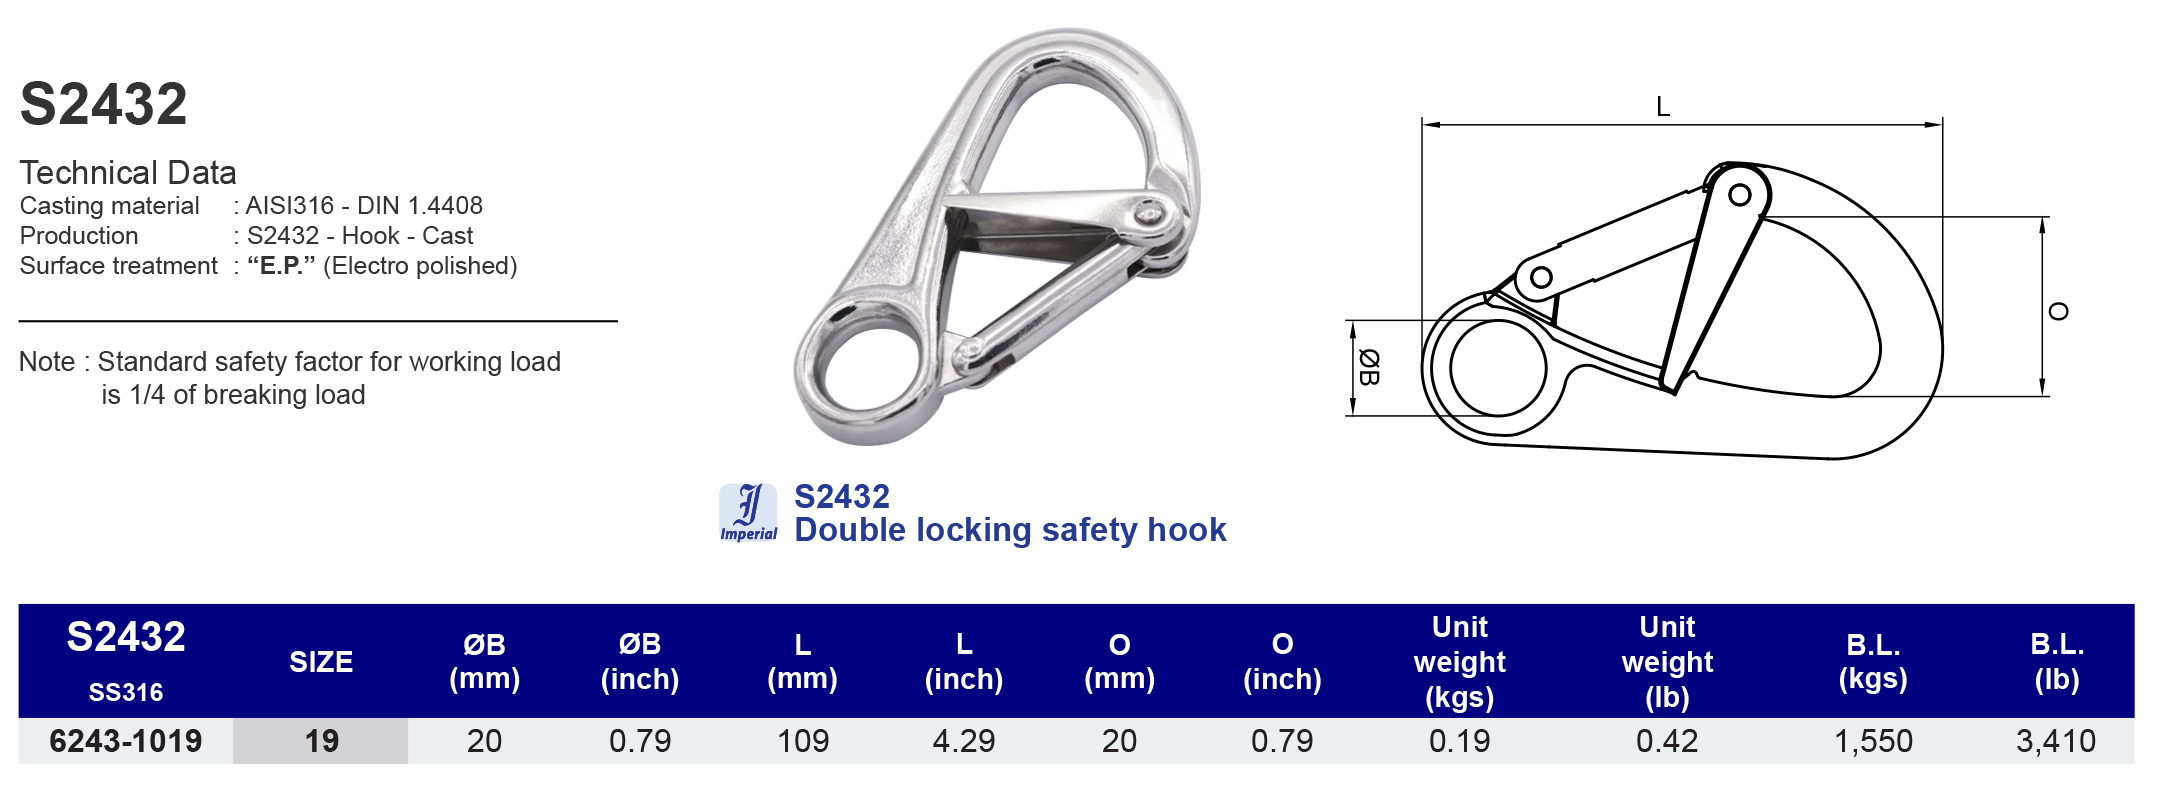 S2432 Double locking safety hook - 316